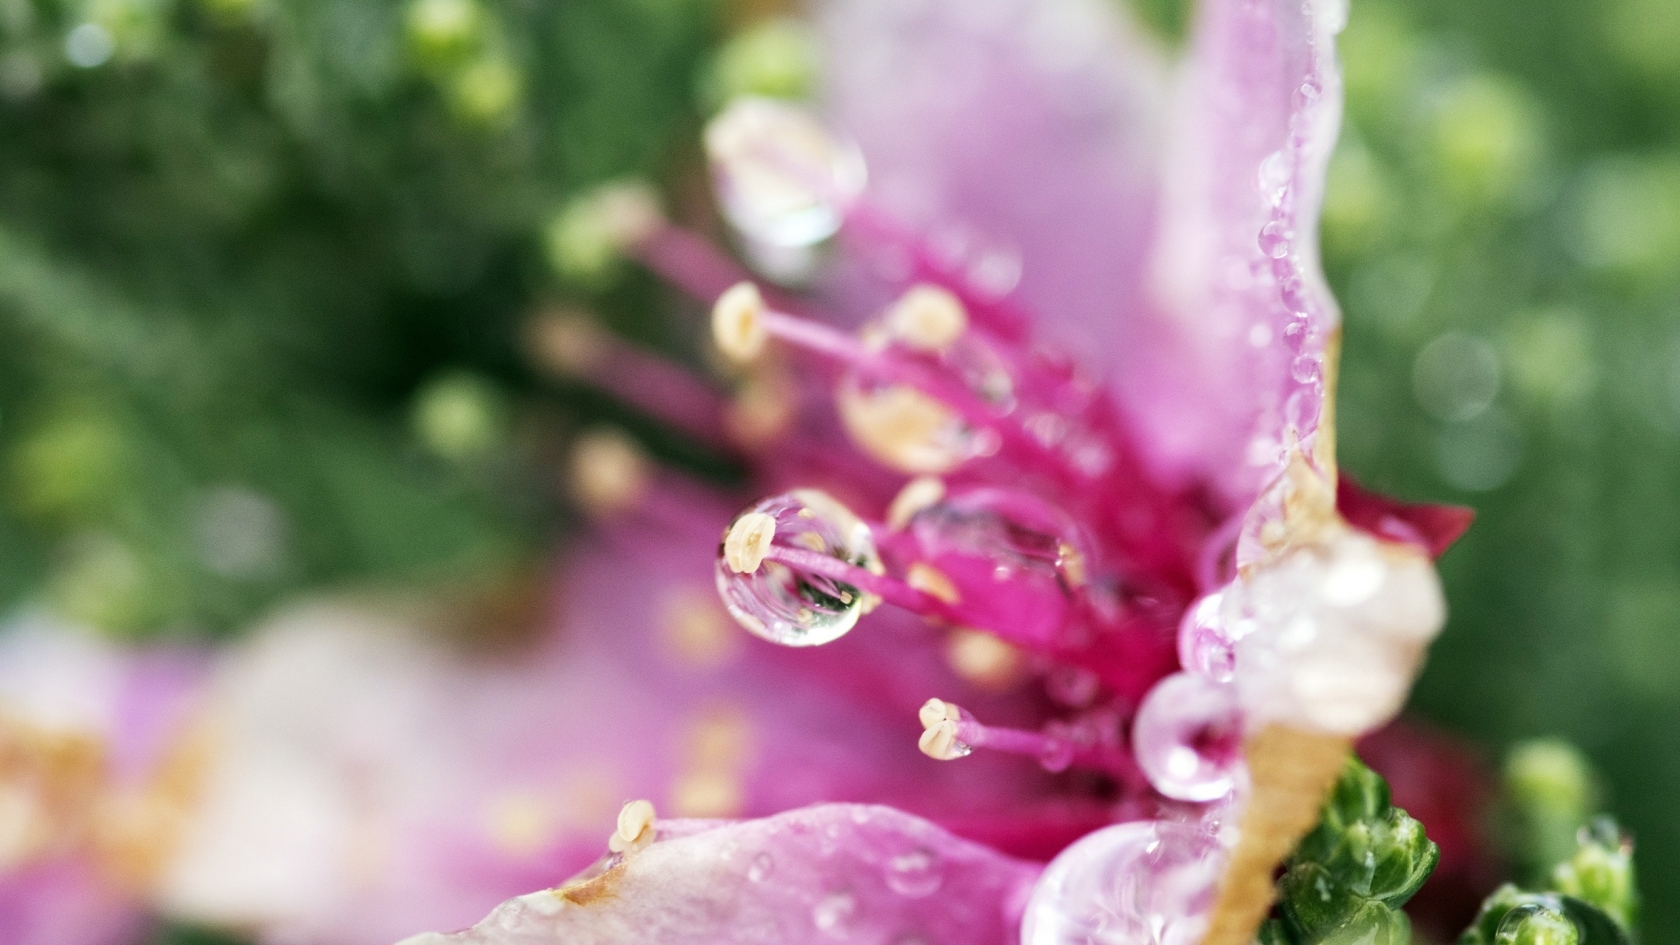 Pink Flower Droplets for 1680 x 945 HDTV resolution